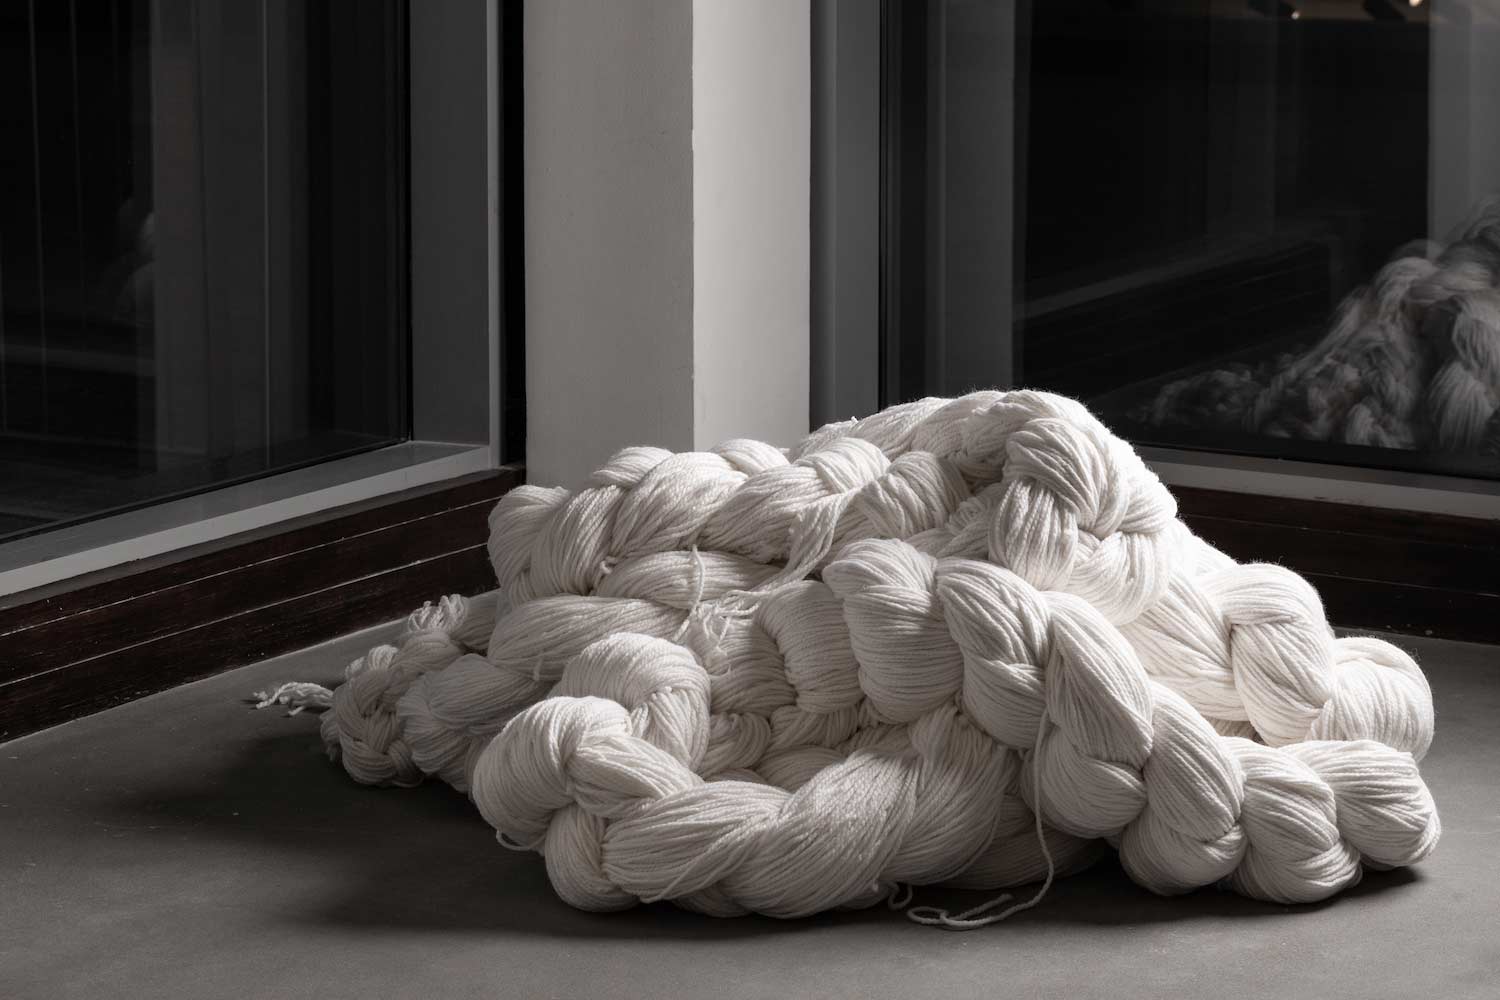 ARTWORK/ Sara Al Haddad, i am trying (2018), hand-crocheted white yarn, 11 meters long